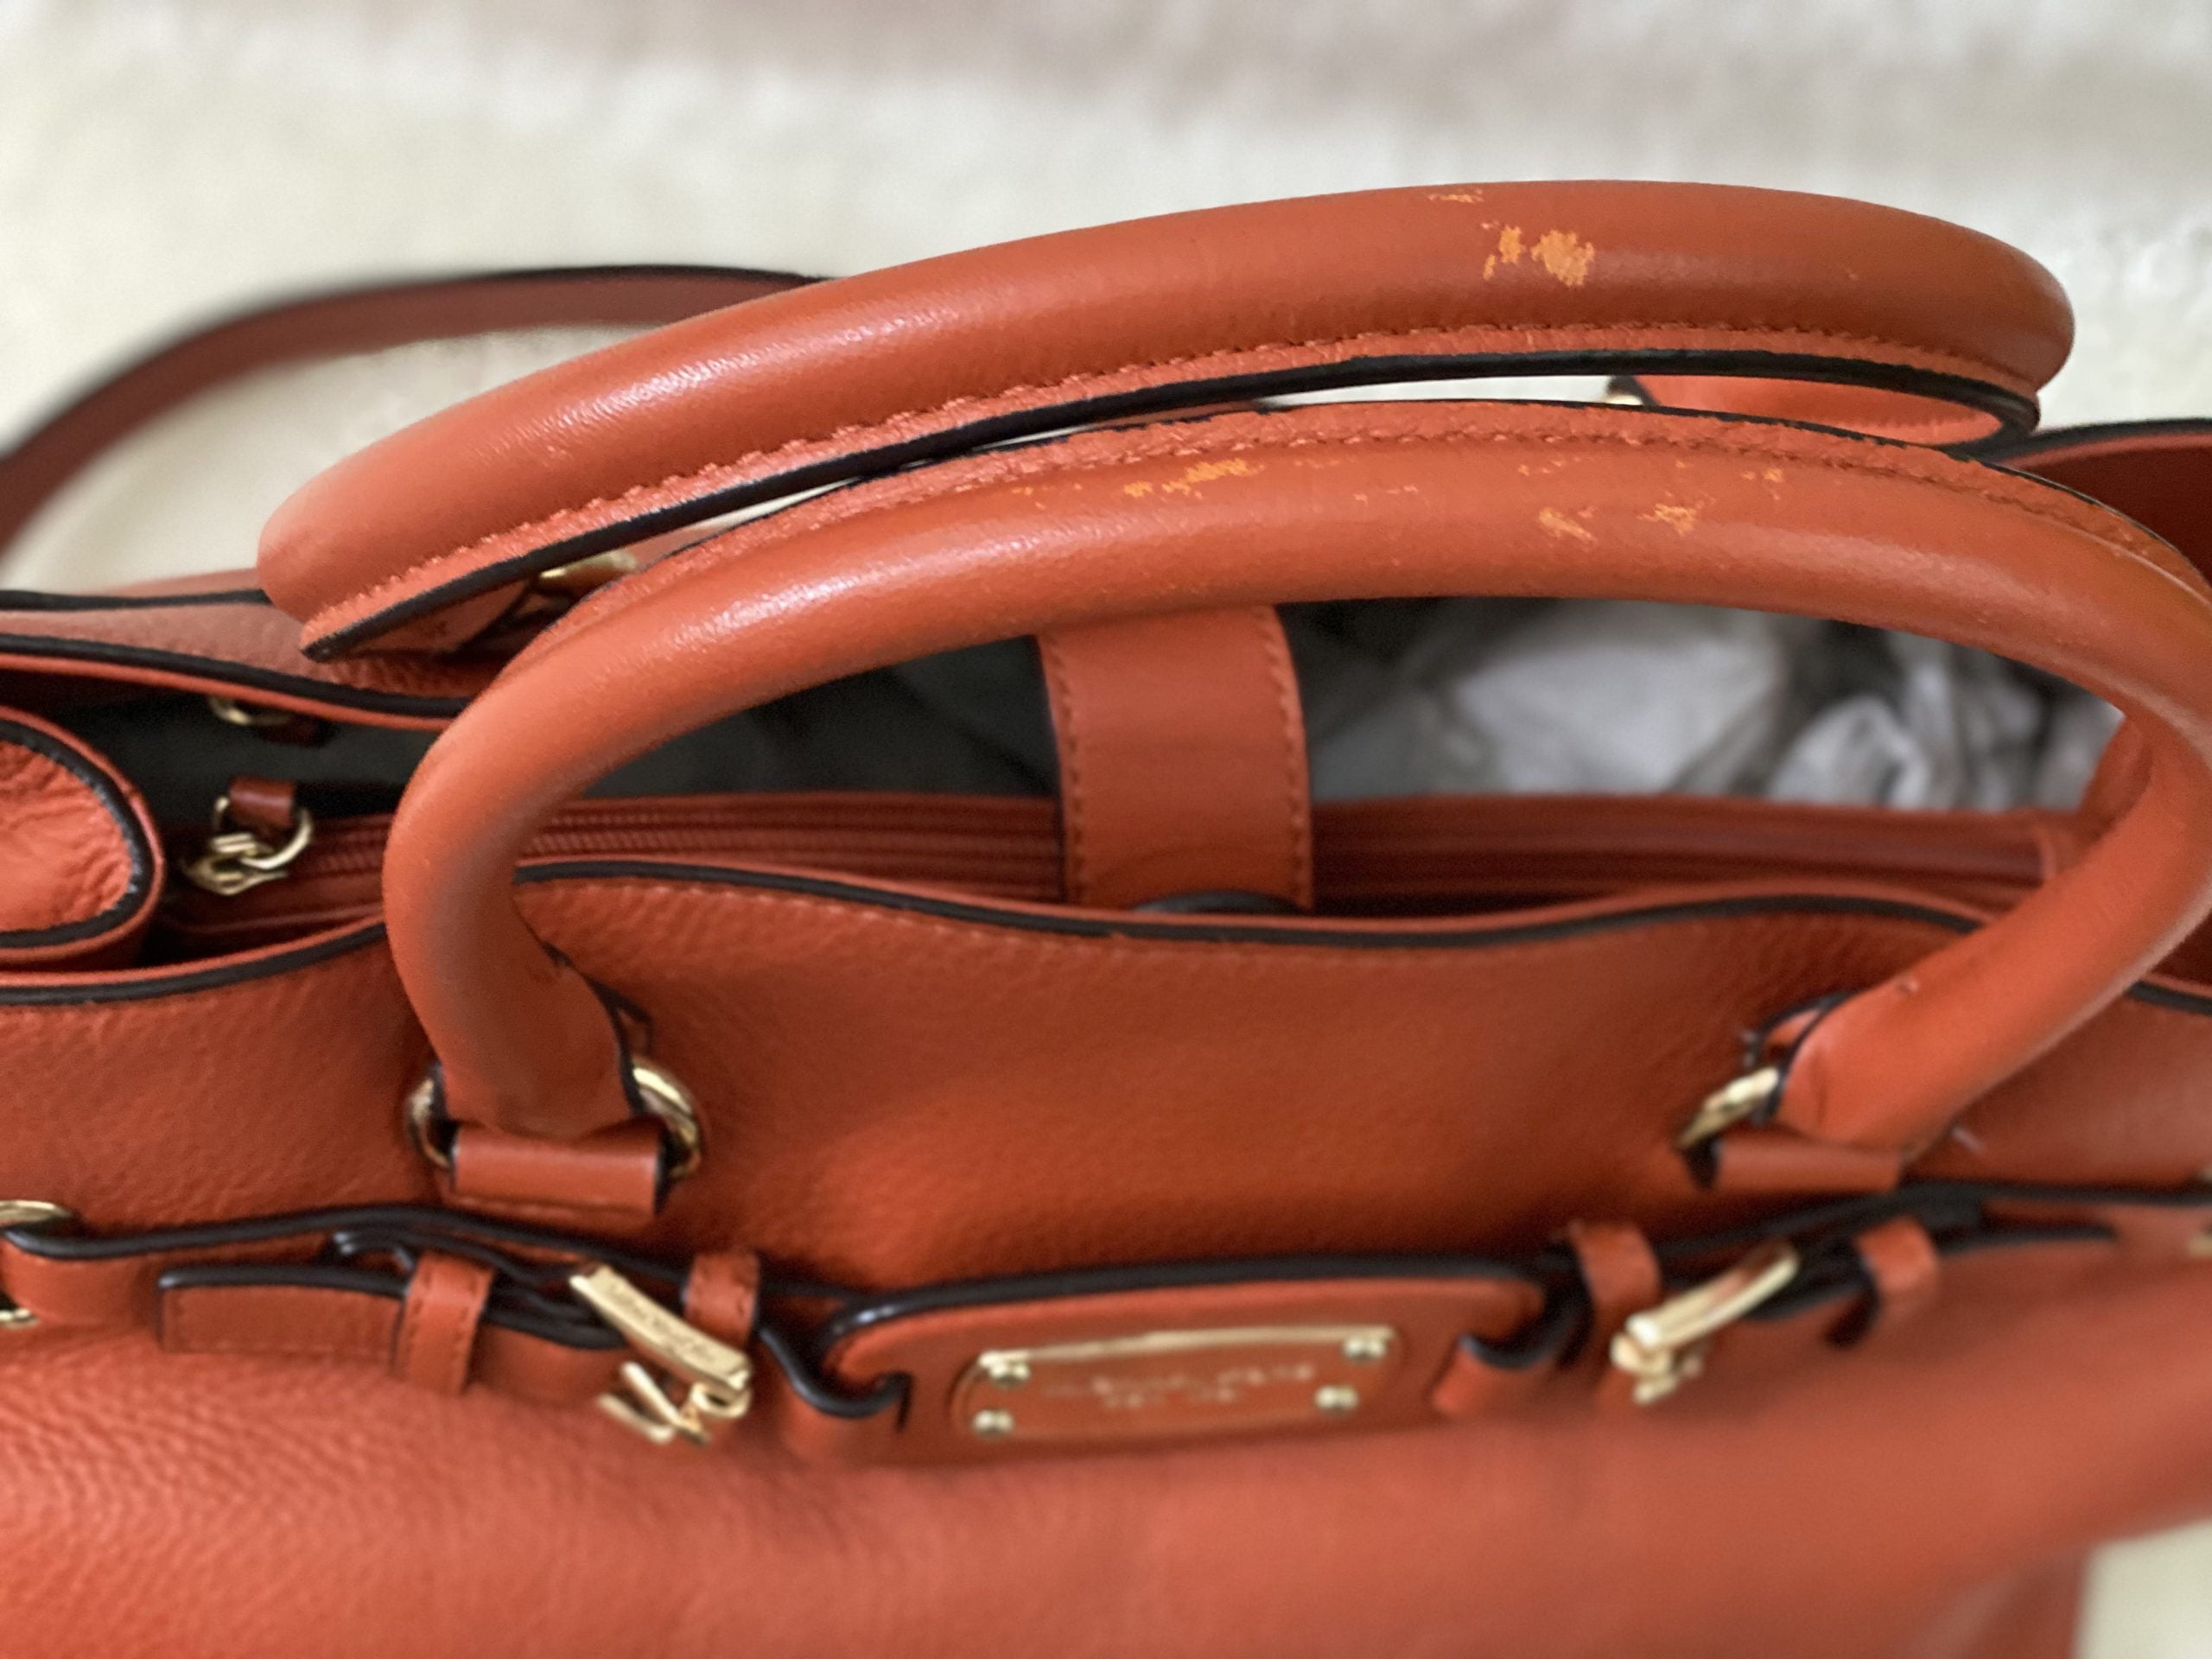 MICHAEL Michael Kors Hamilton leather tote bag - ShopStyle